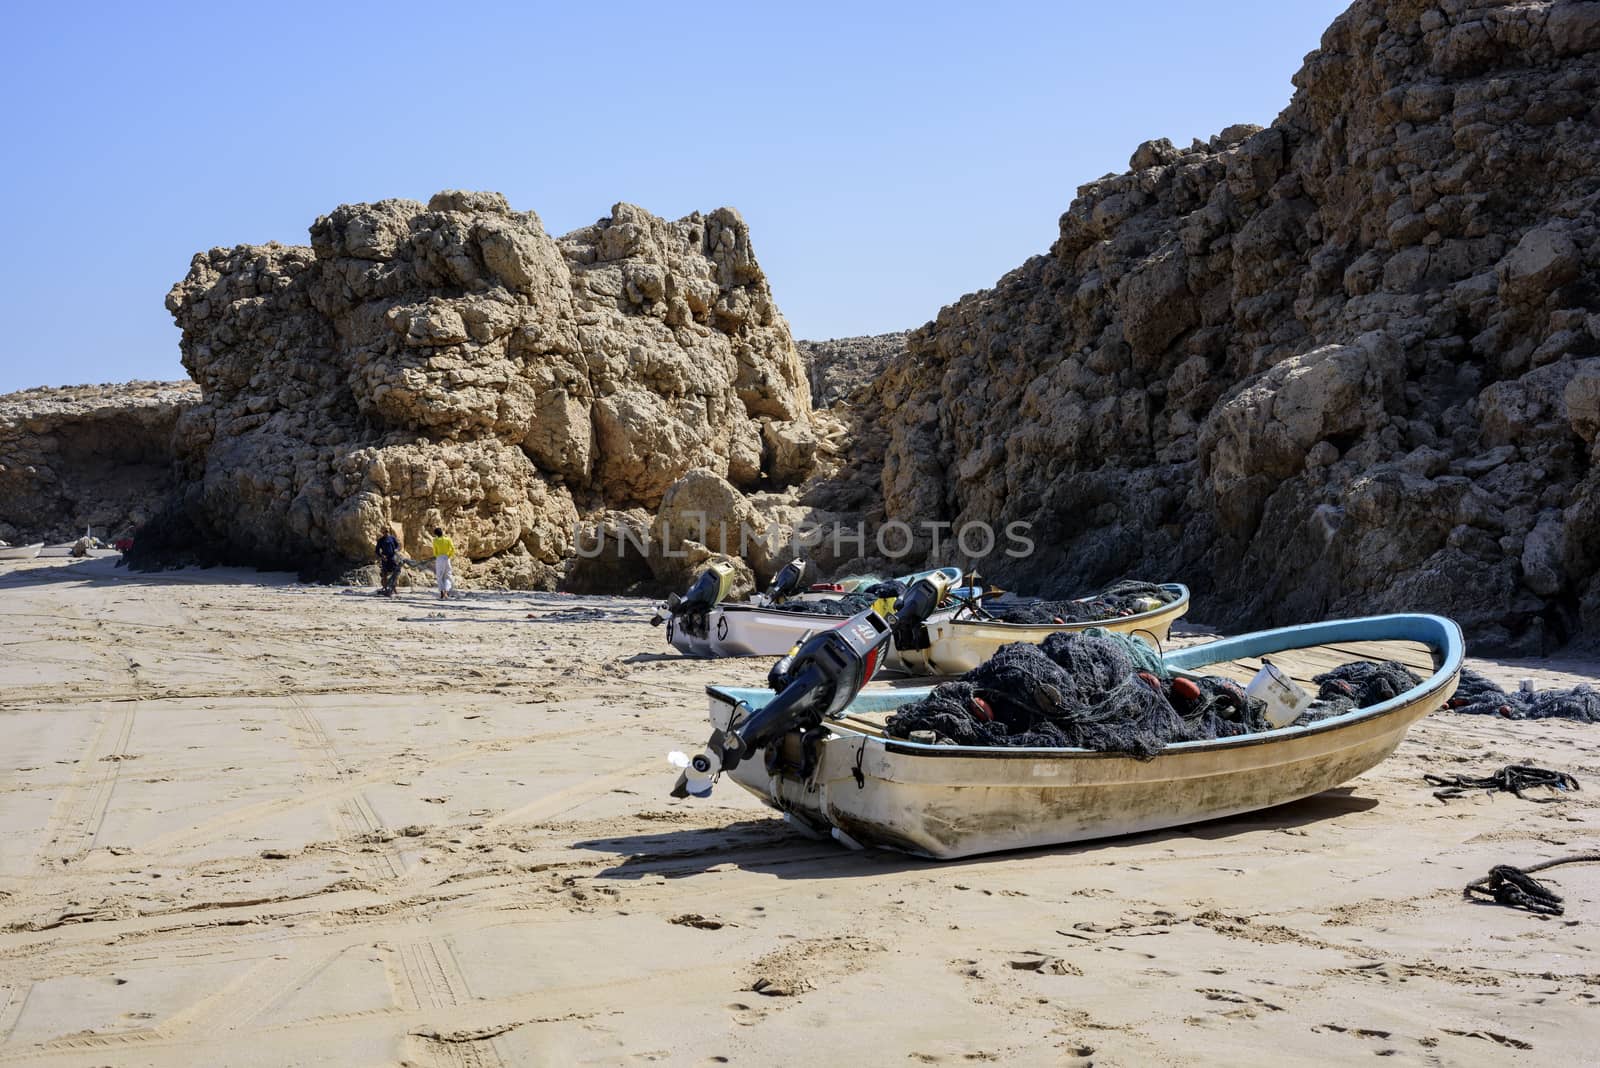 Fishermen arranging their net on the beach of Ras Al Jinz besides some boats, Oman